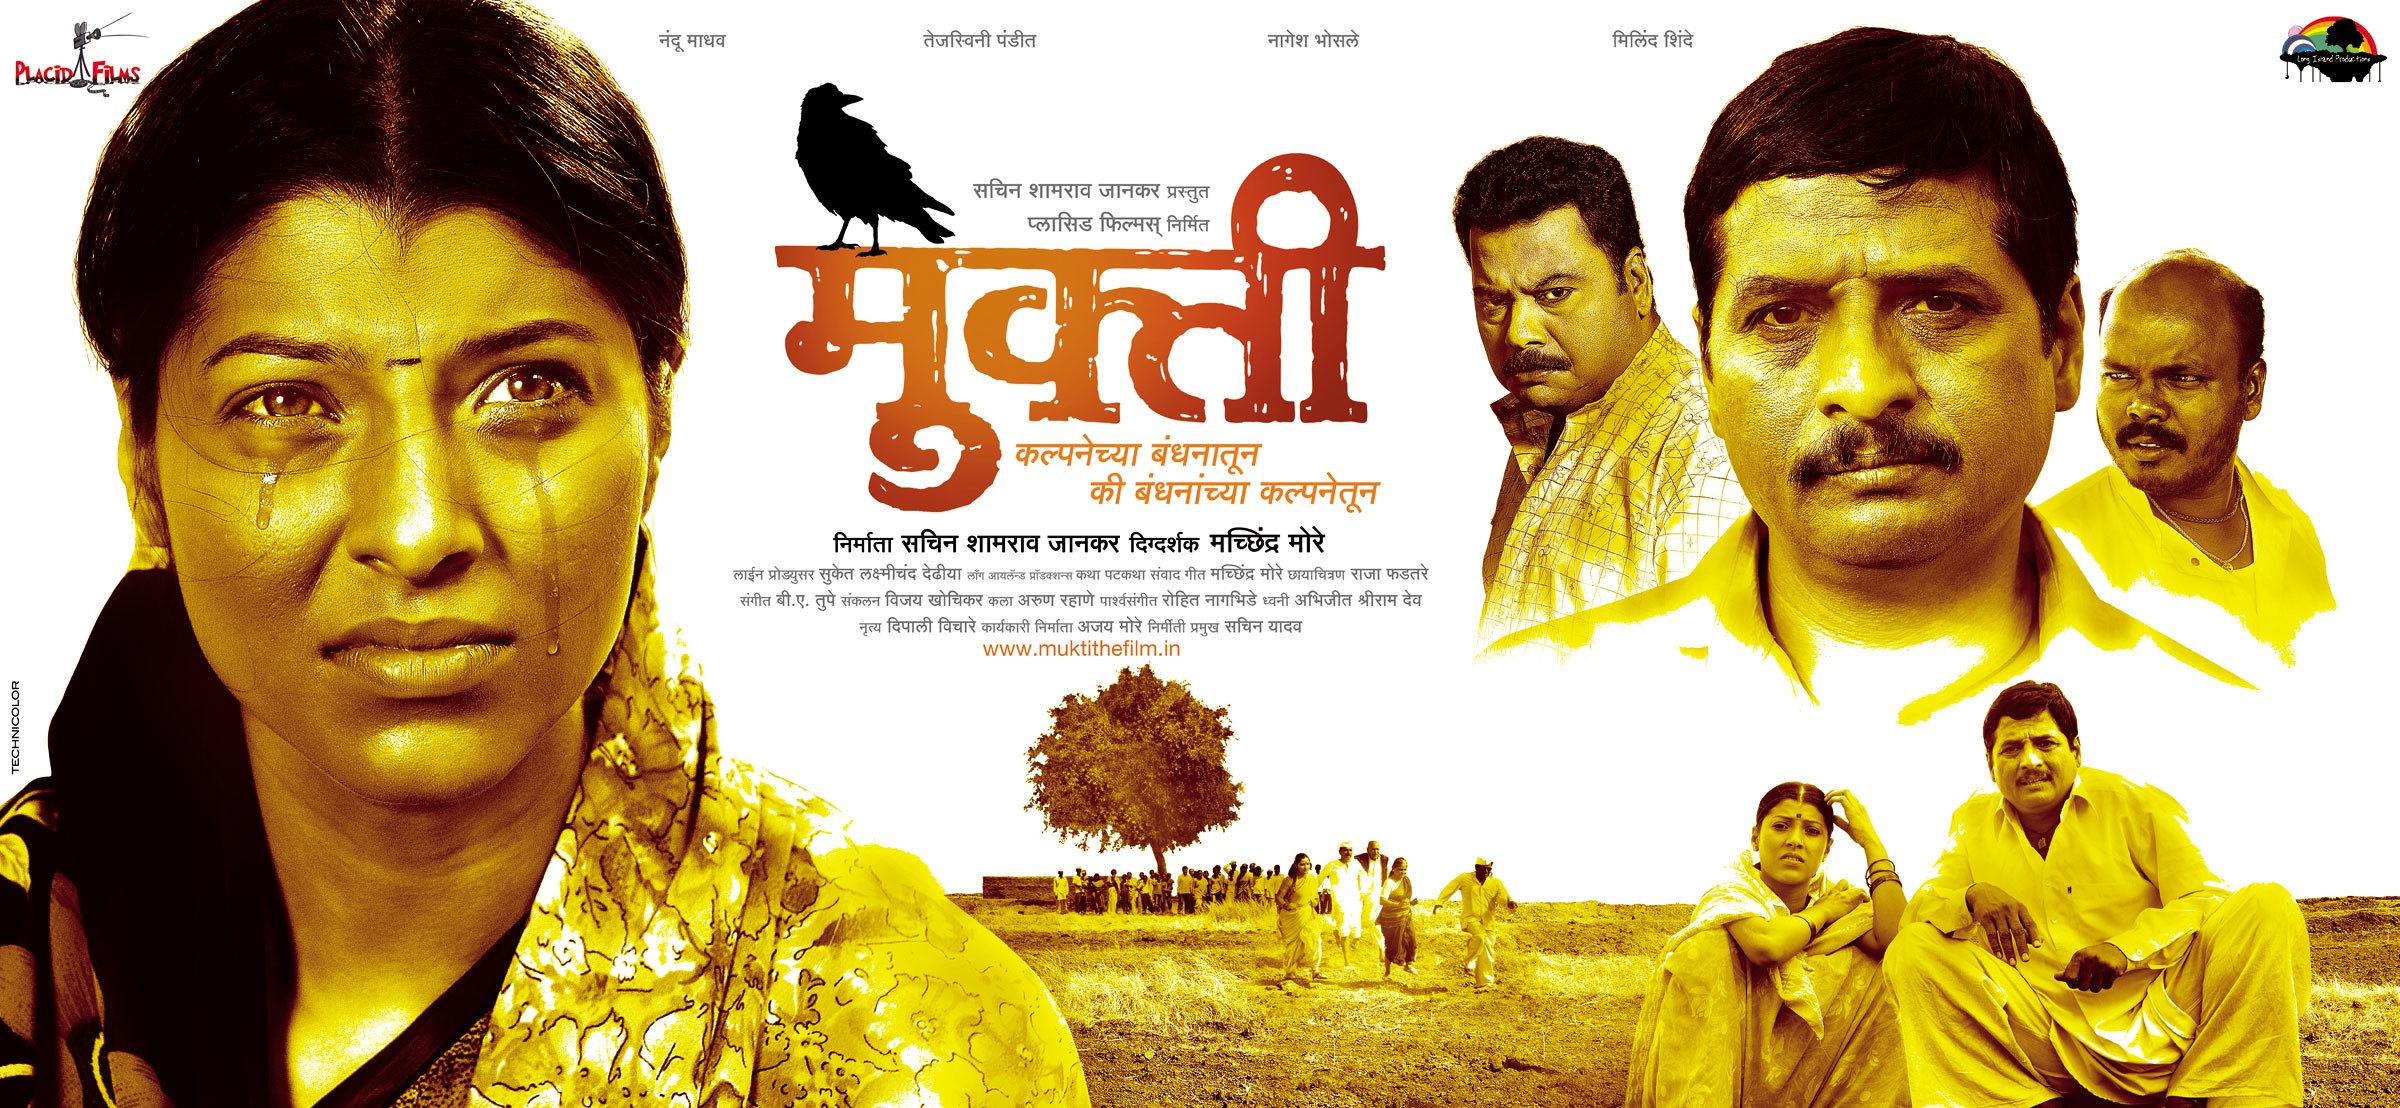 Mega Sized Movie Poster Image for Mukti (#6 of 7)